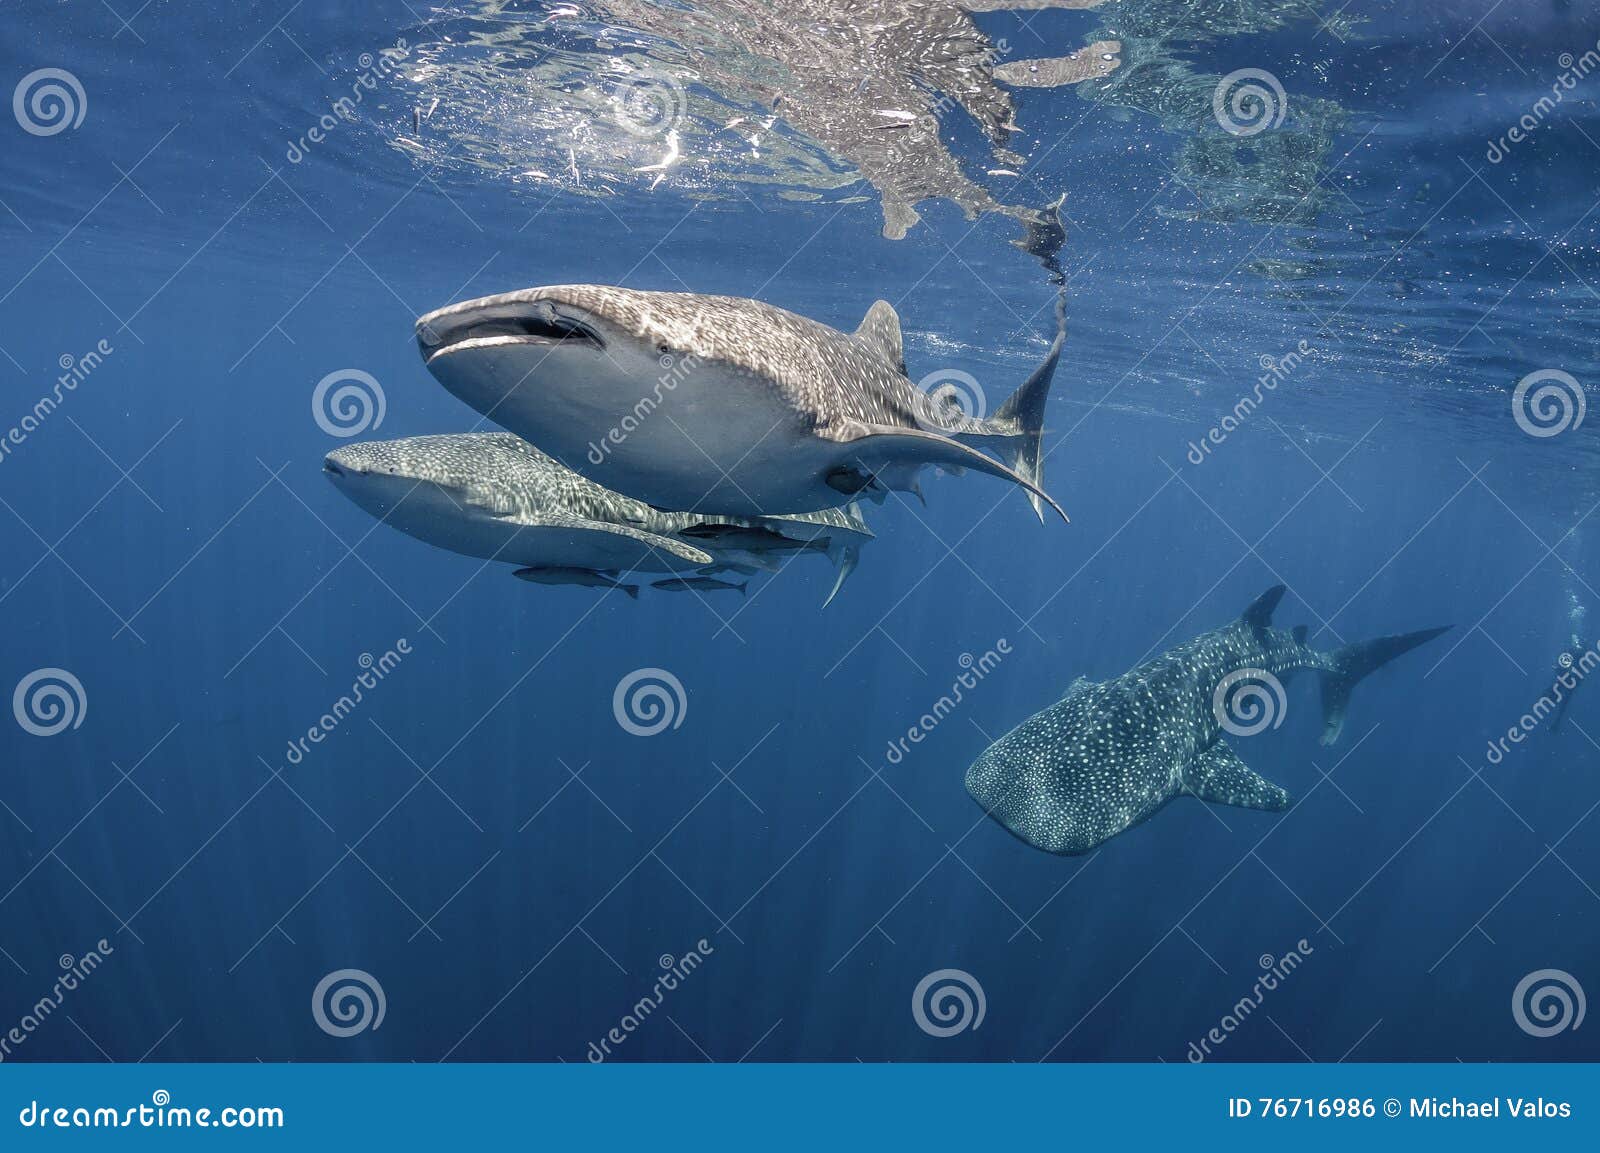 three whale sharks